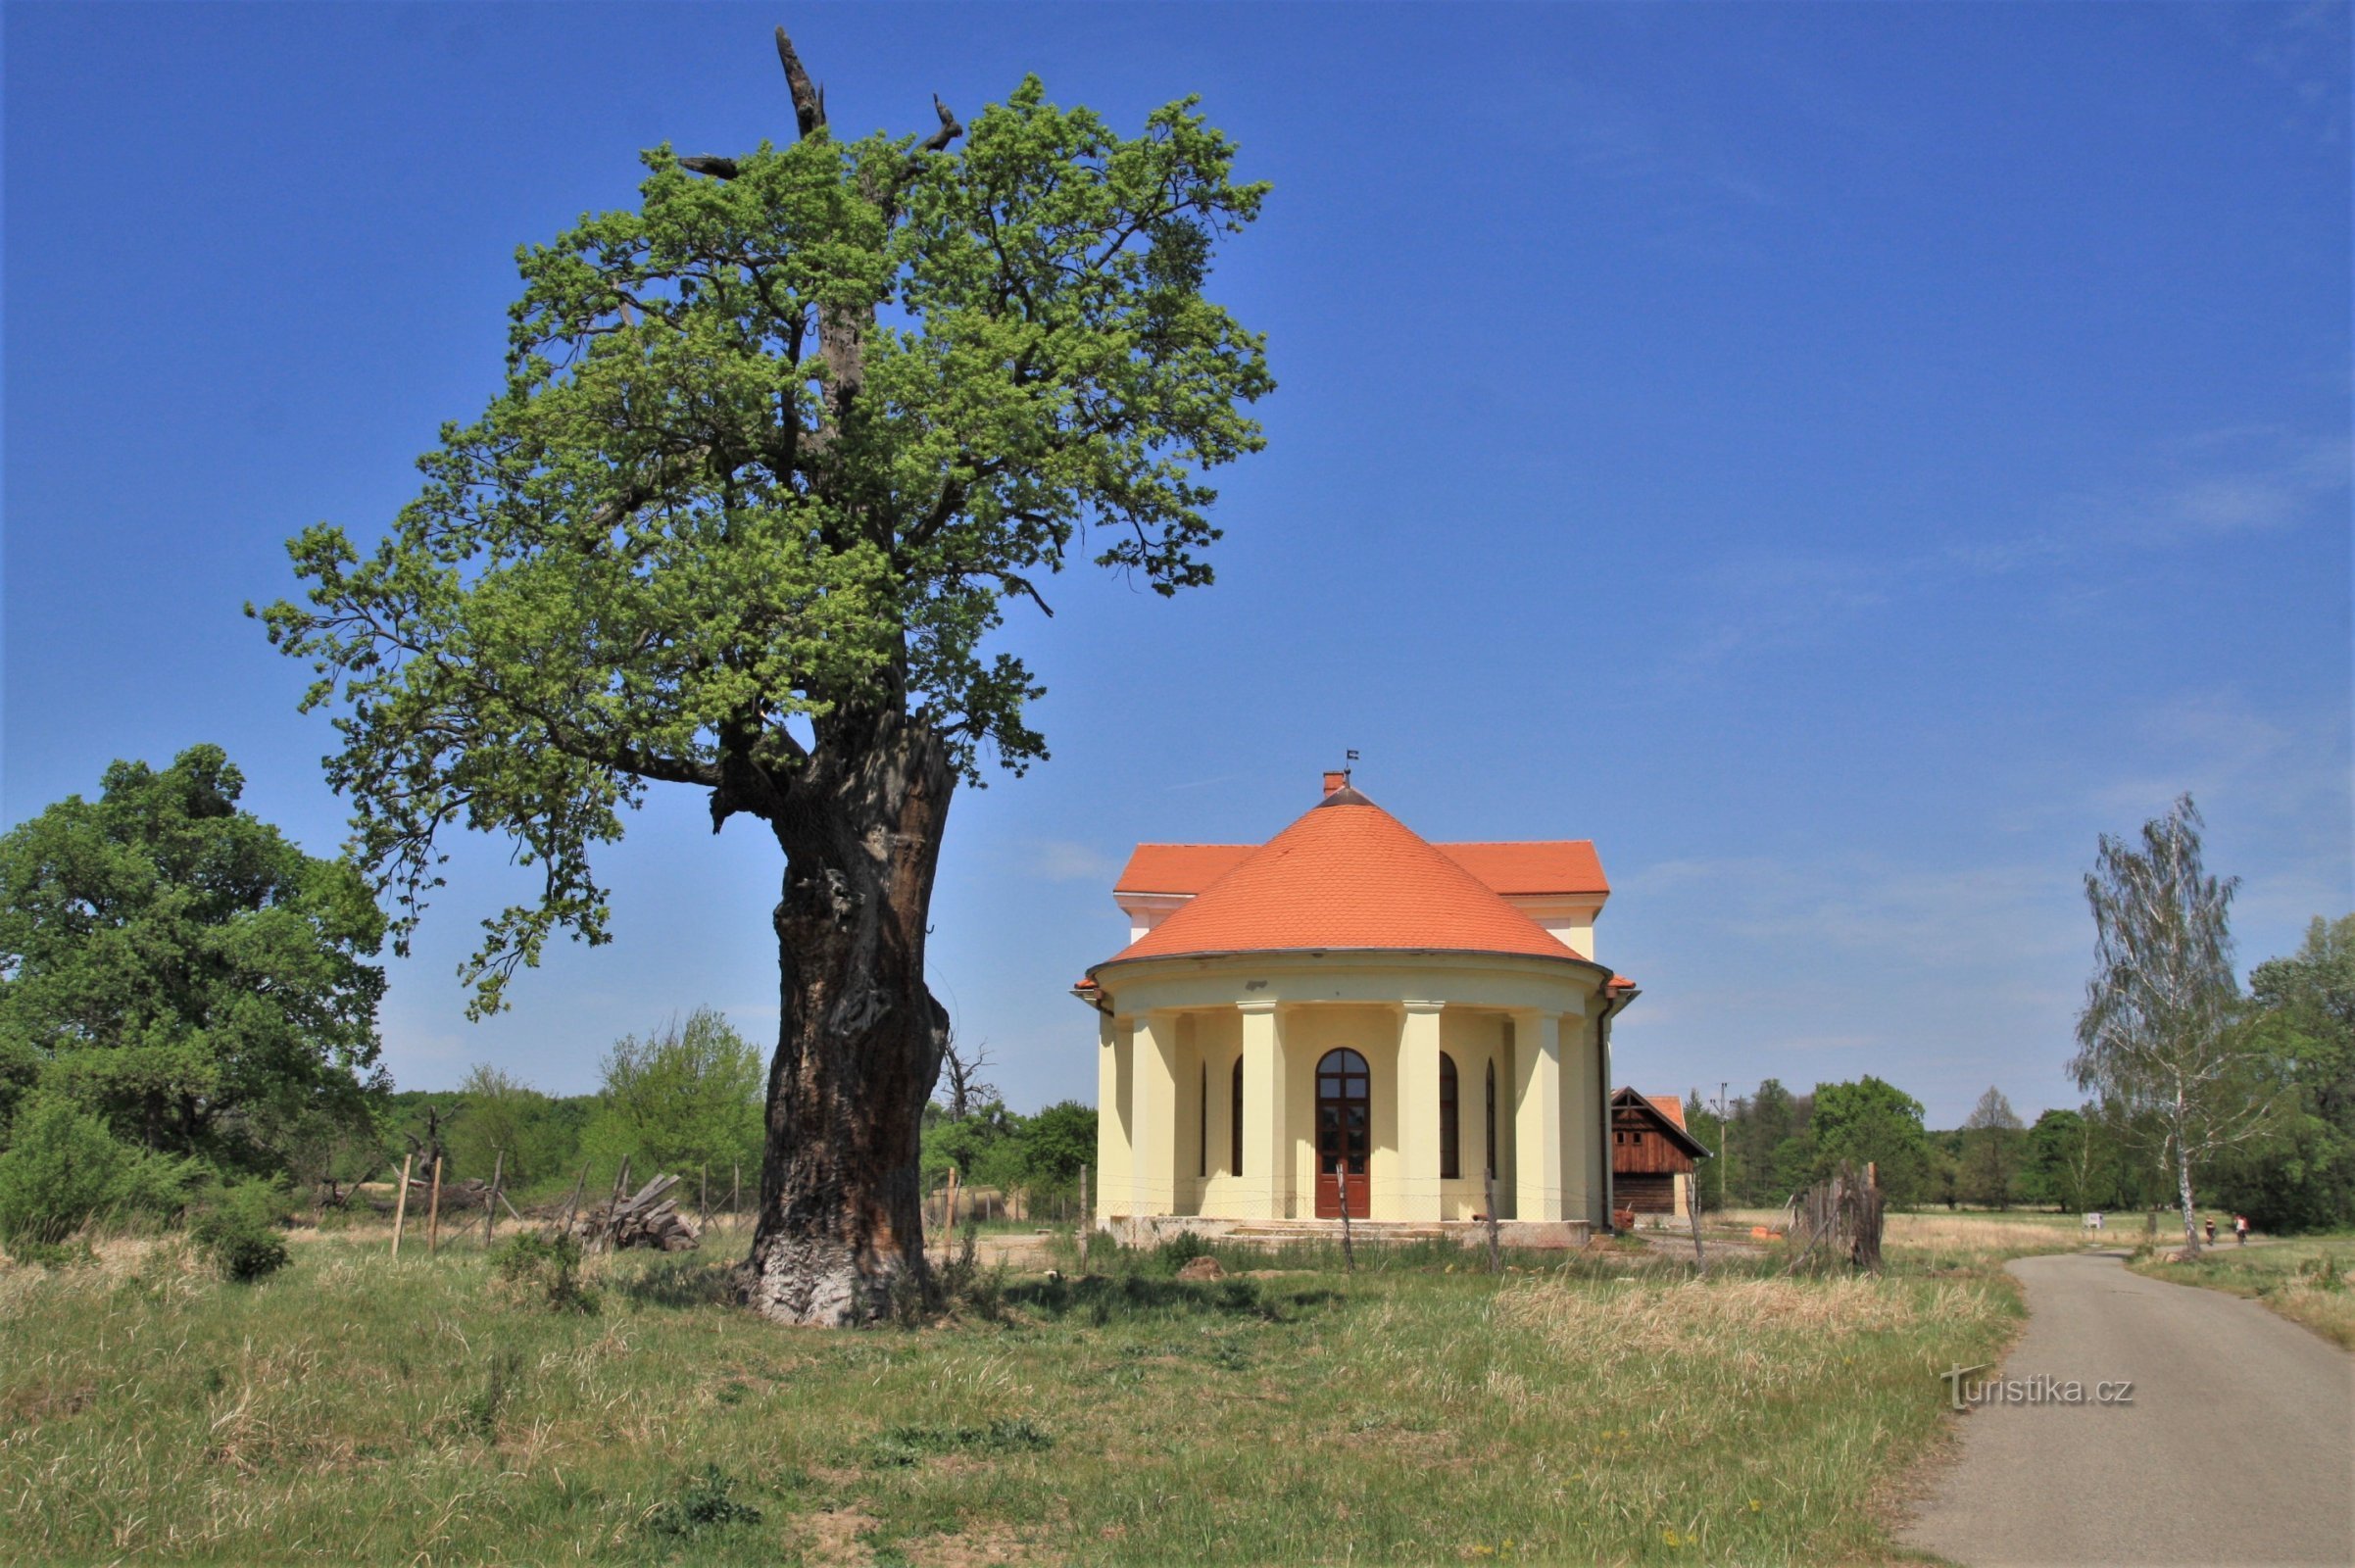 Castle with an old oak tree